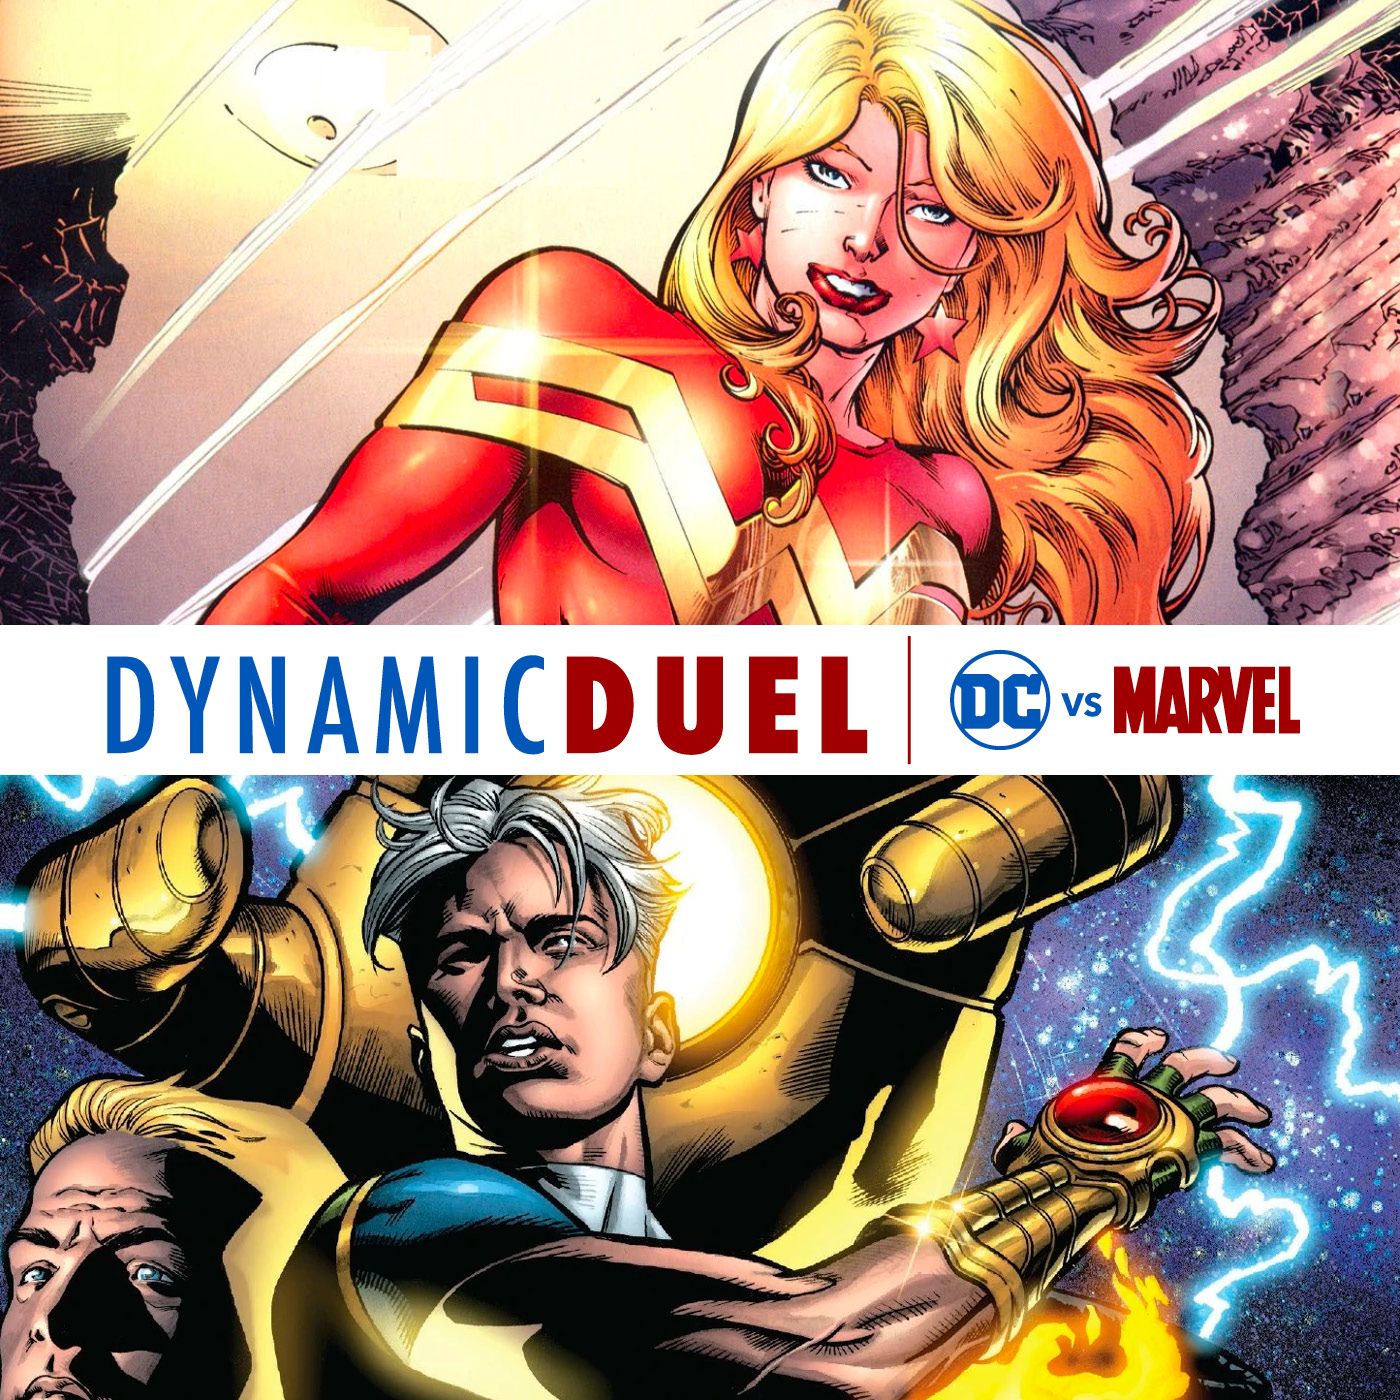 Wonder Girl vs Marvel Boy Image